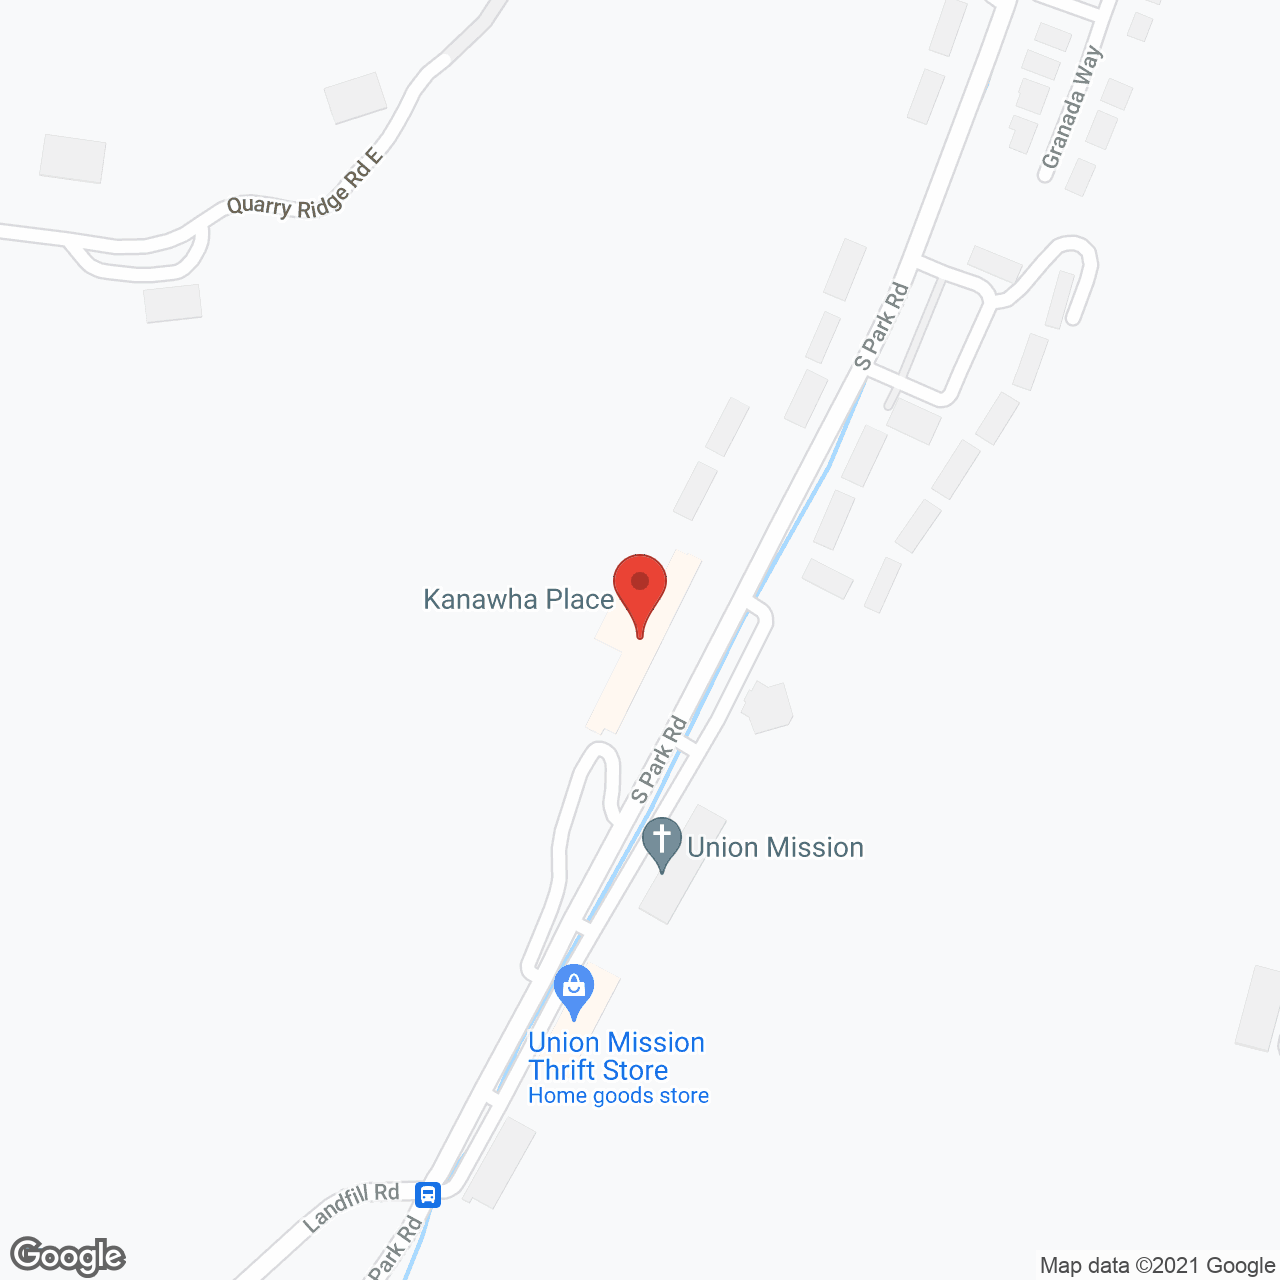 Kanawha Place in google map